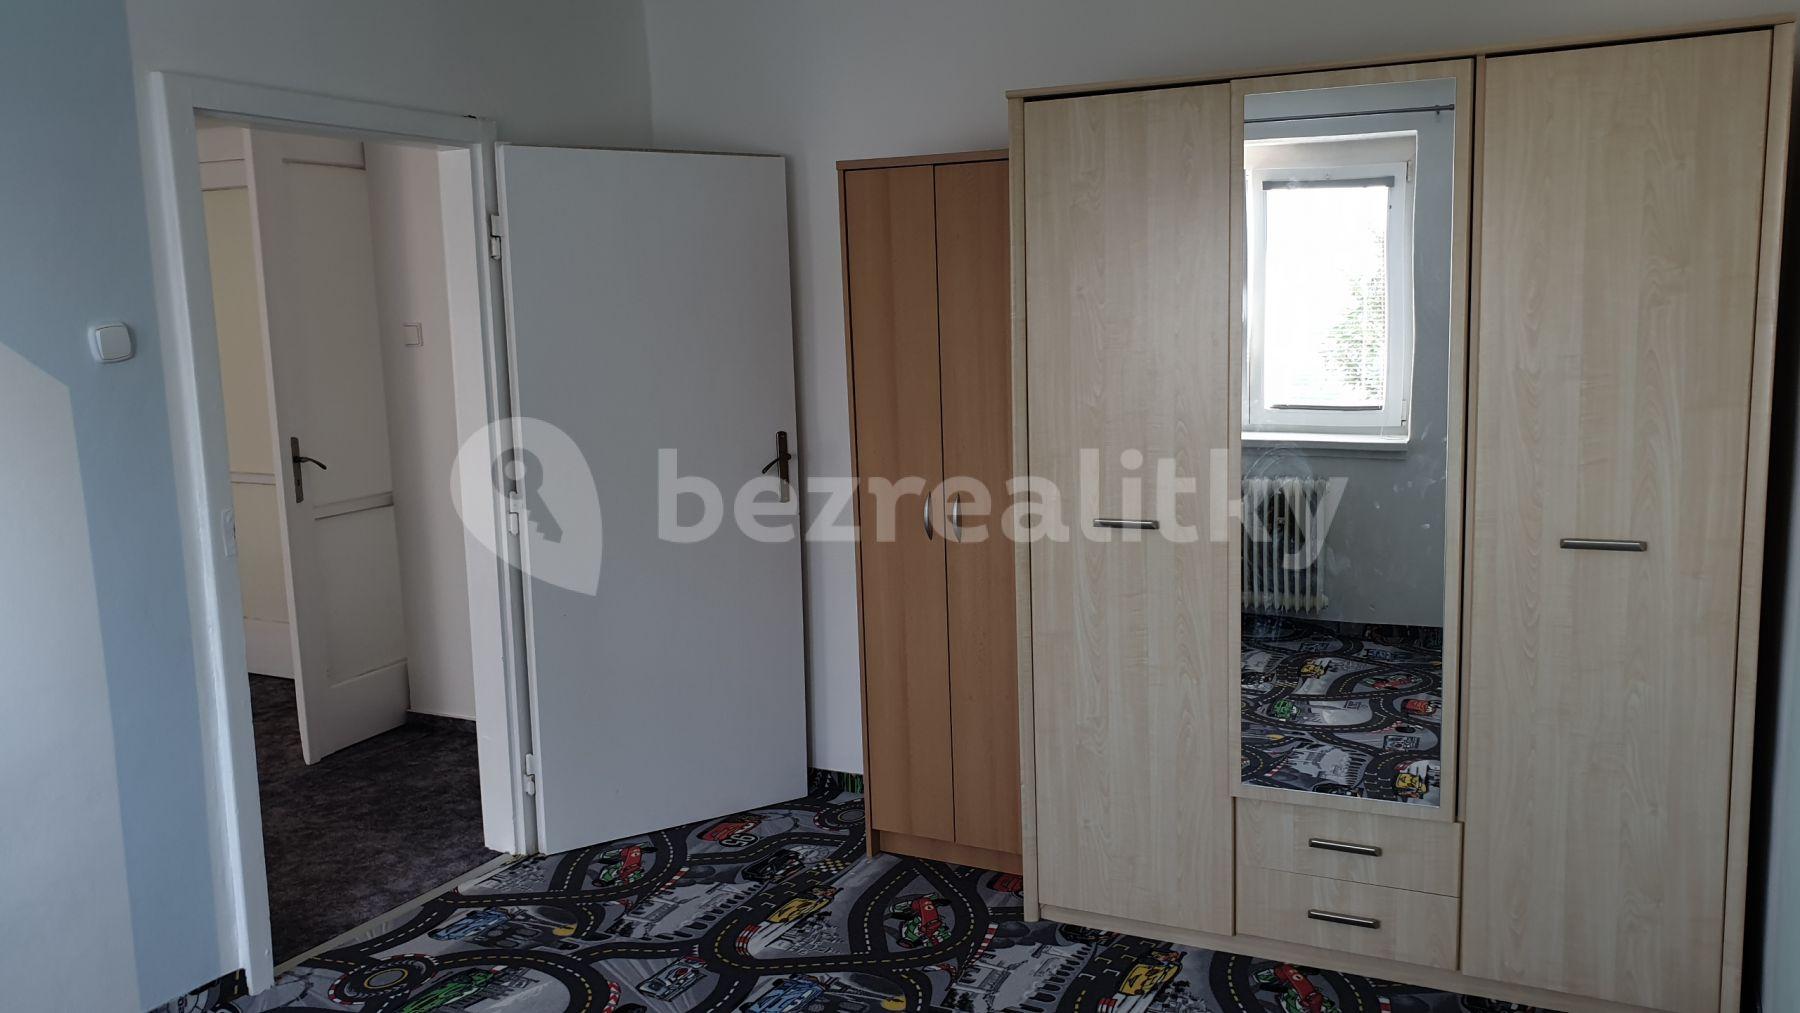 2 bedroom flat to rent, 50 m², Svahová, Meziboří, Ústecký Region